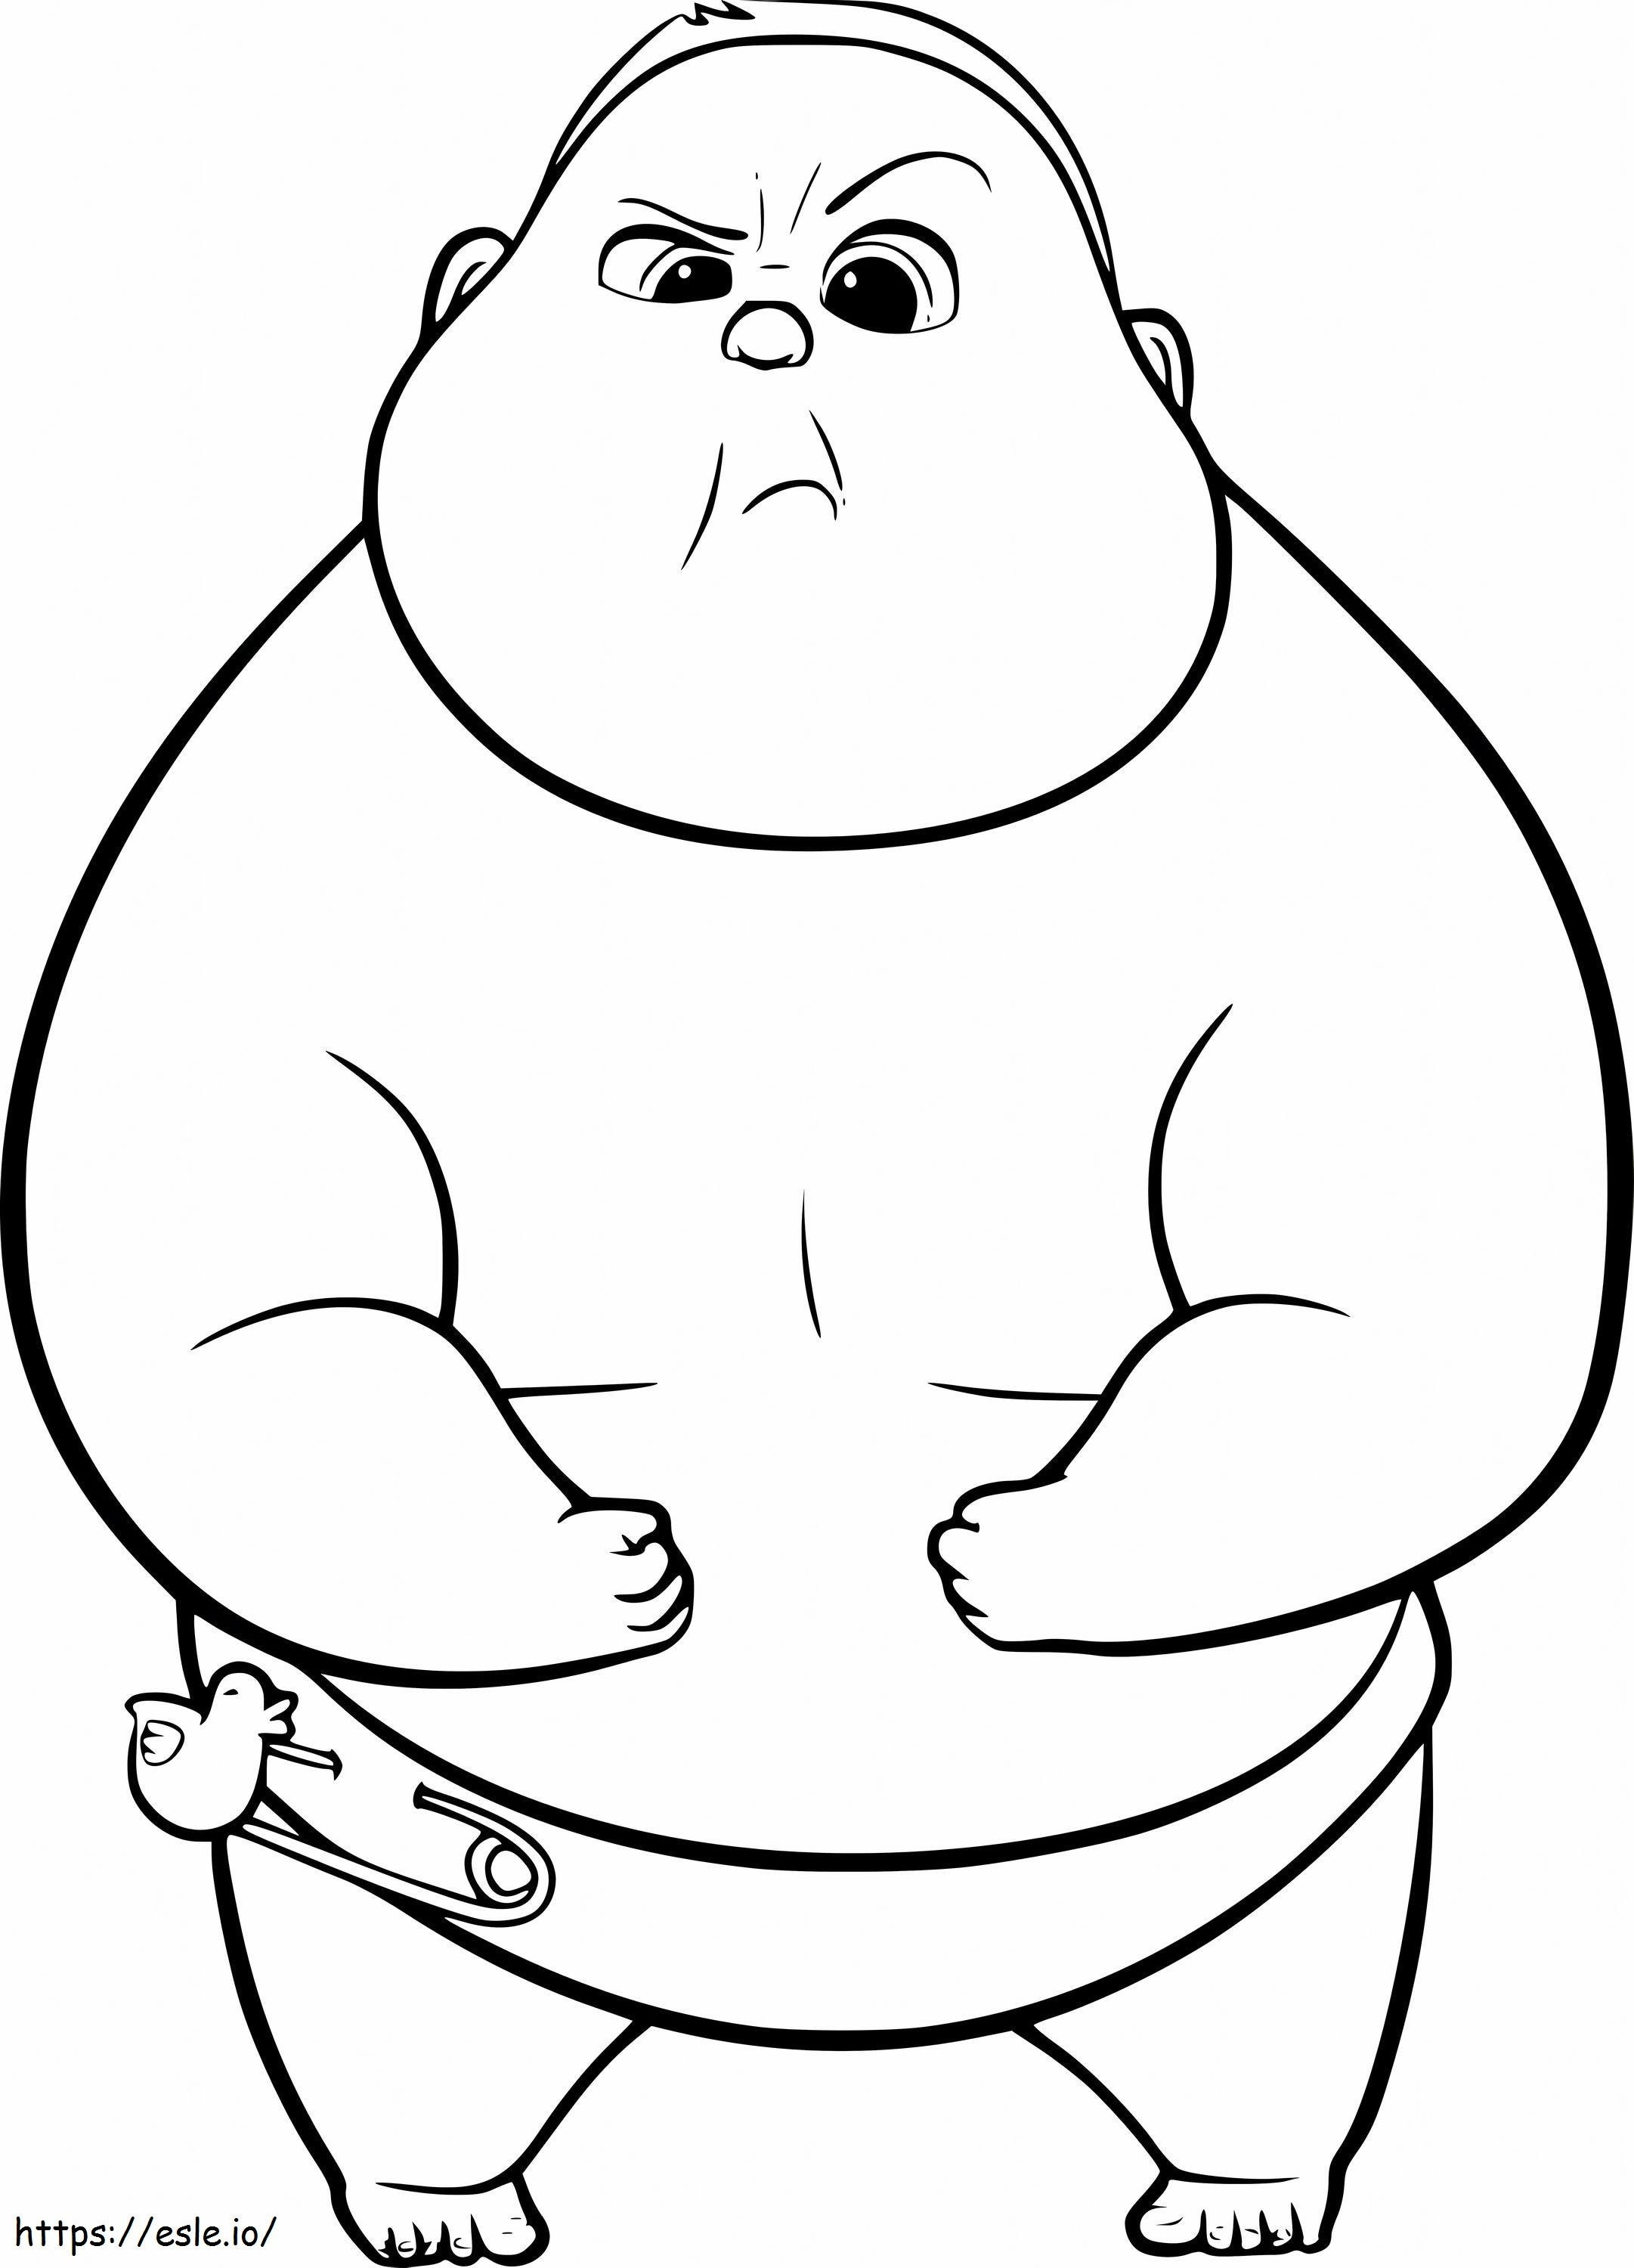 Big Fat Baby coloring page